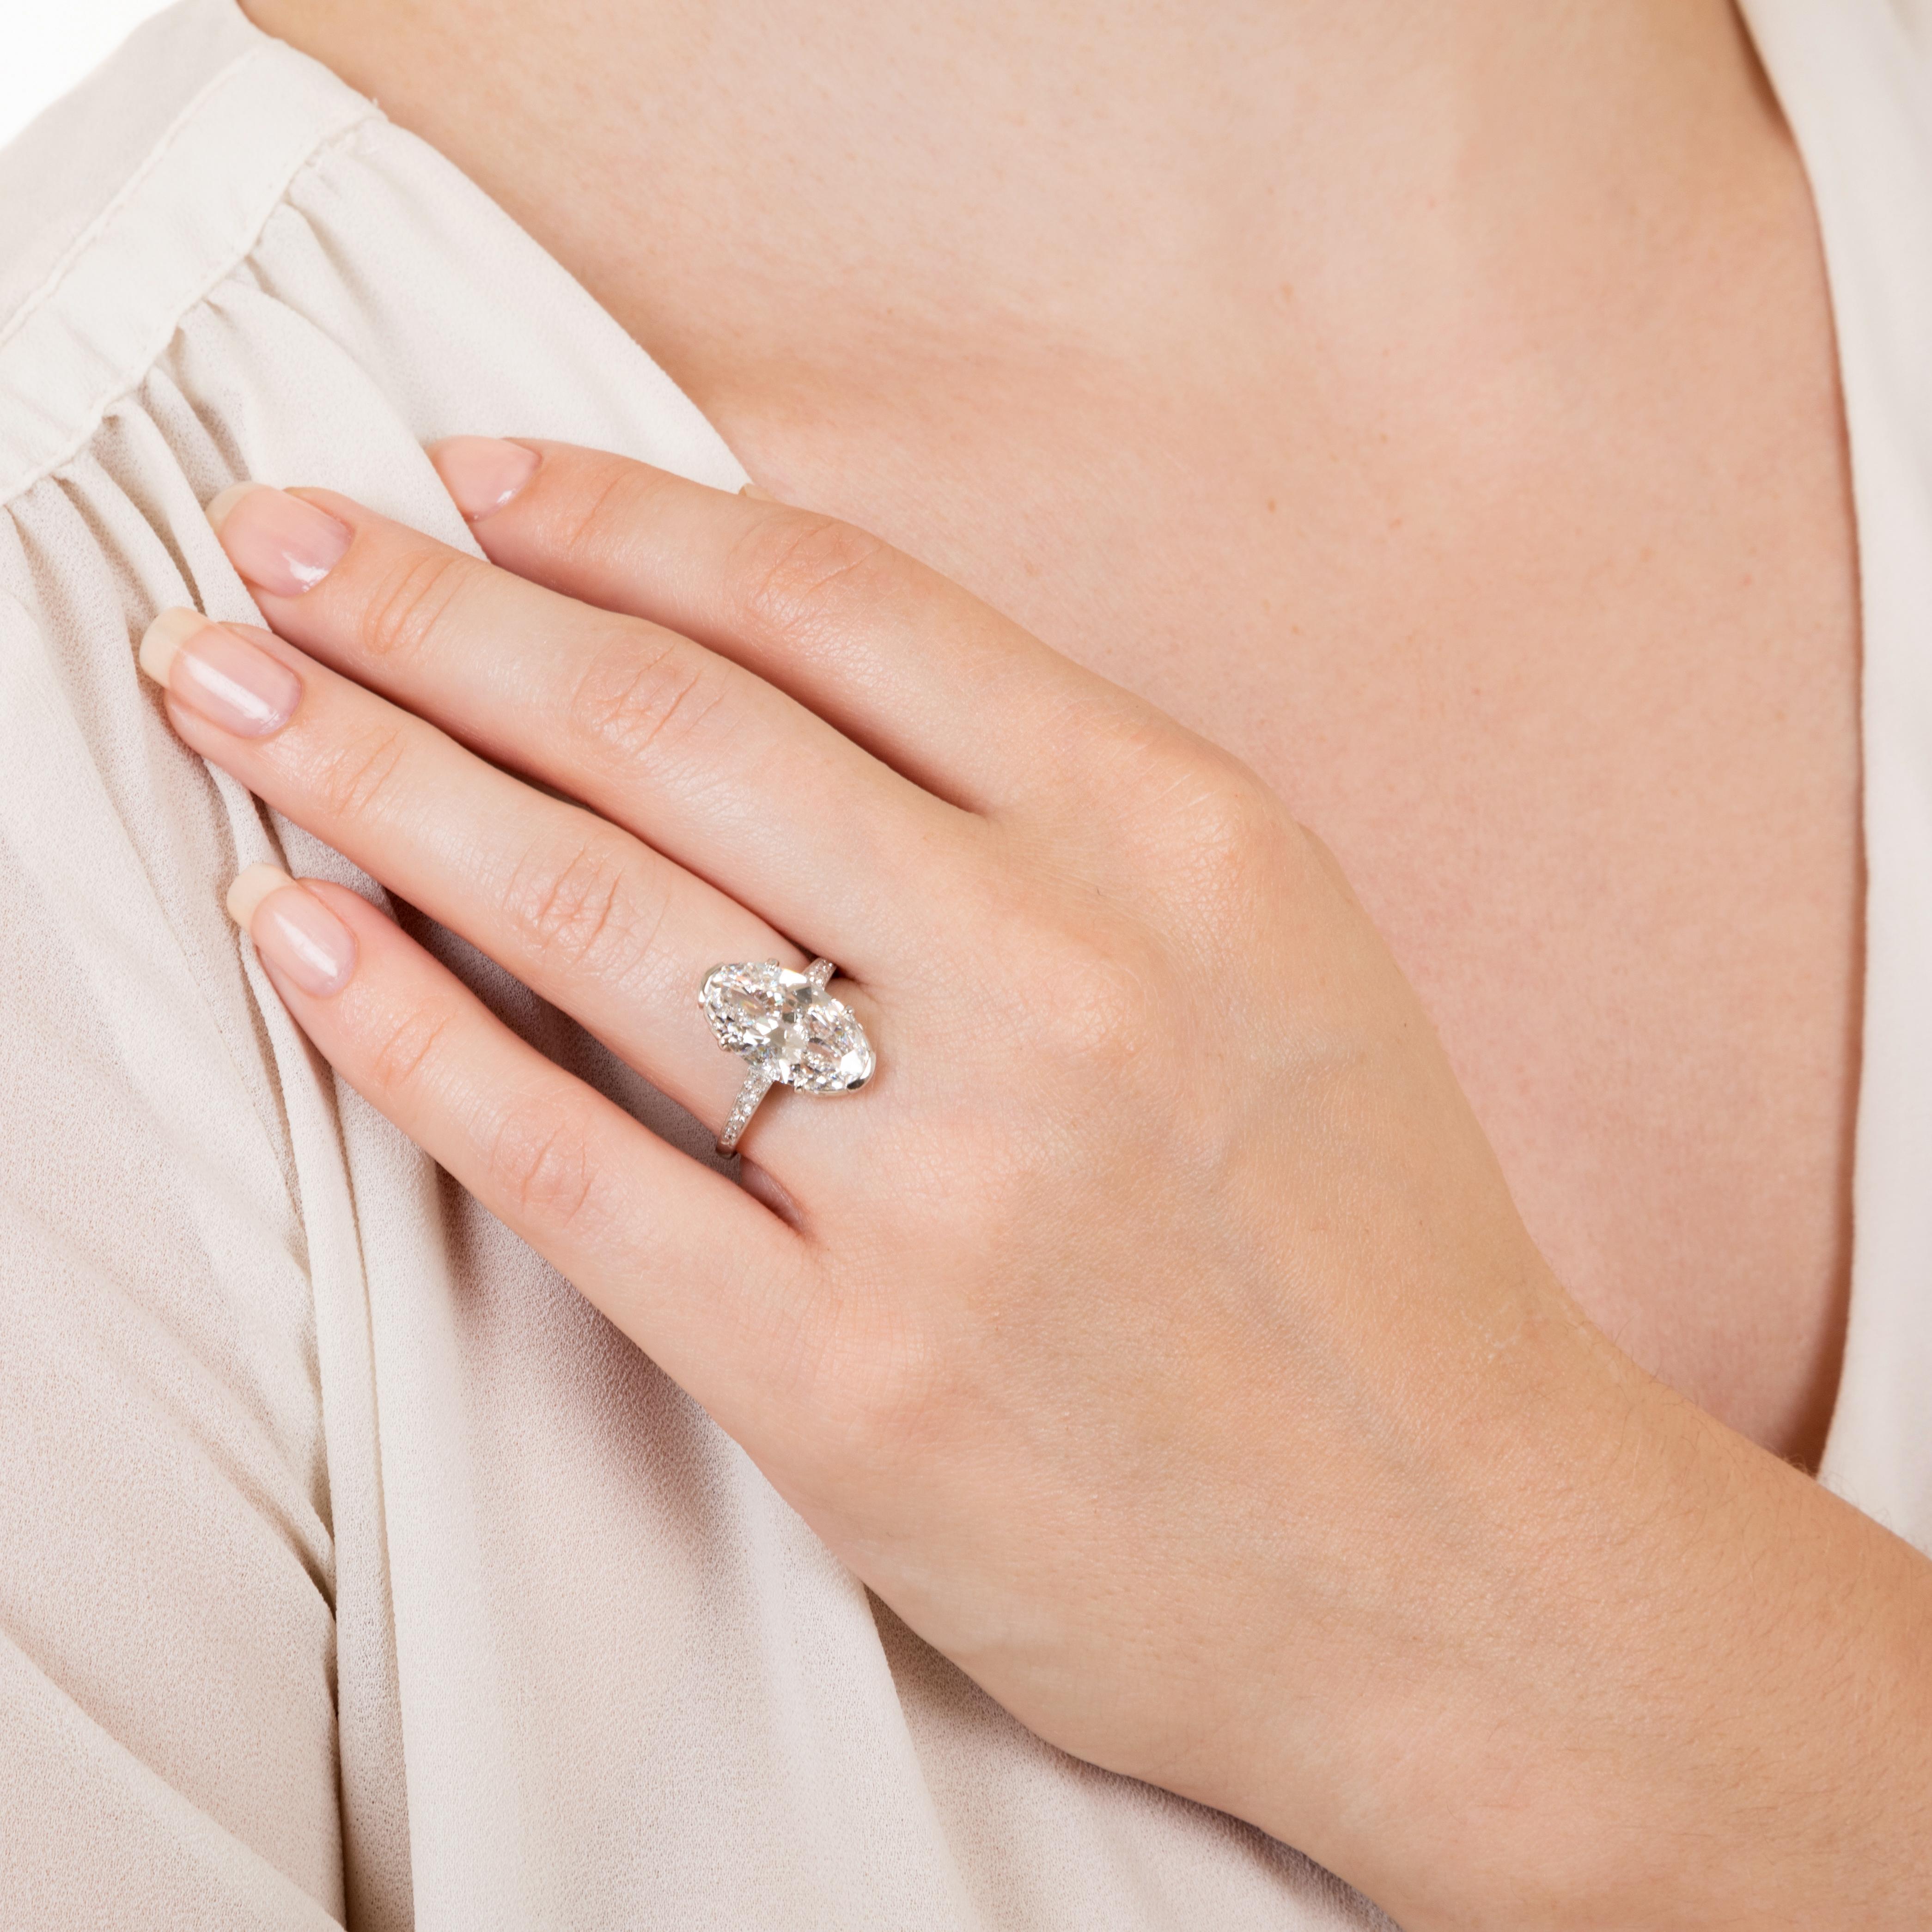 Women's Art Deco 4.45 Carat Oval-Cut Diamond Engagement Ring GIA, D IF Type IIA